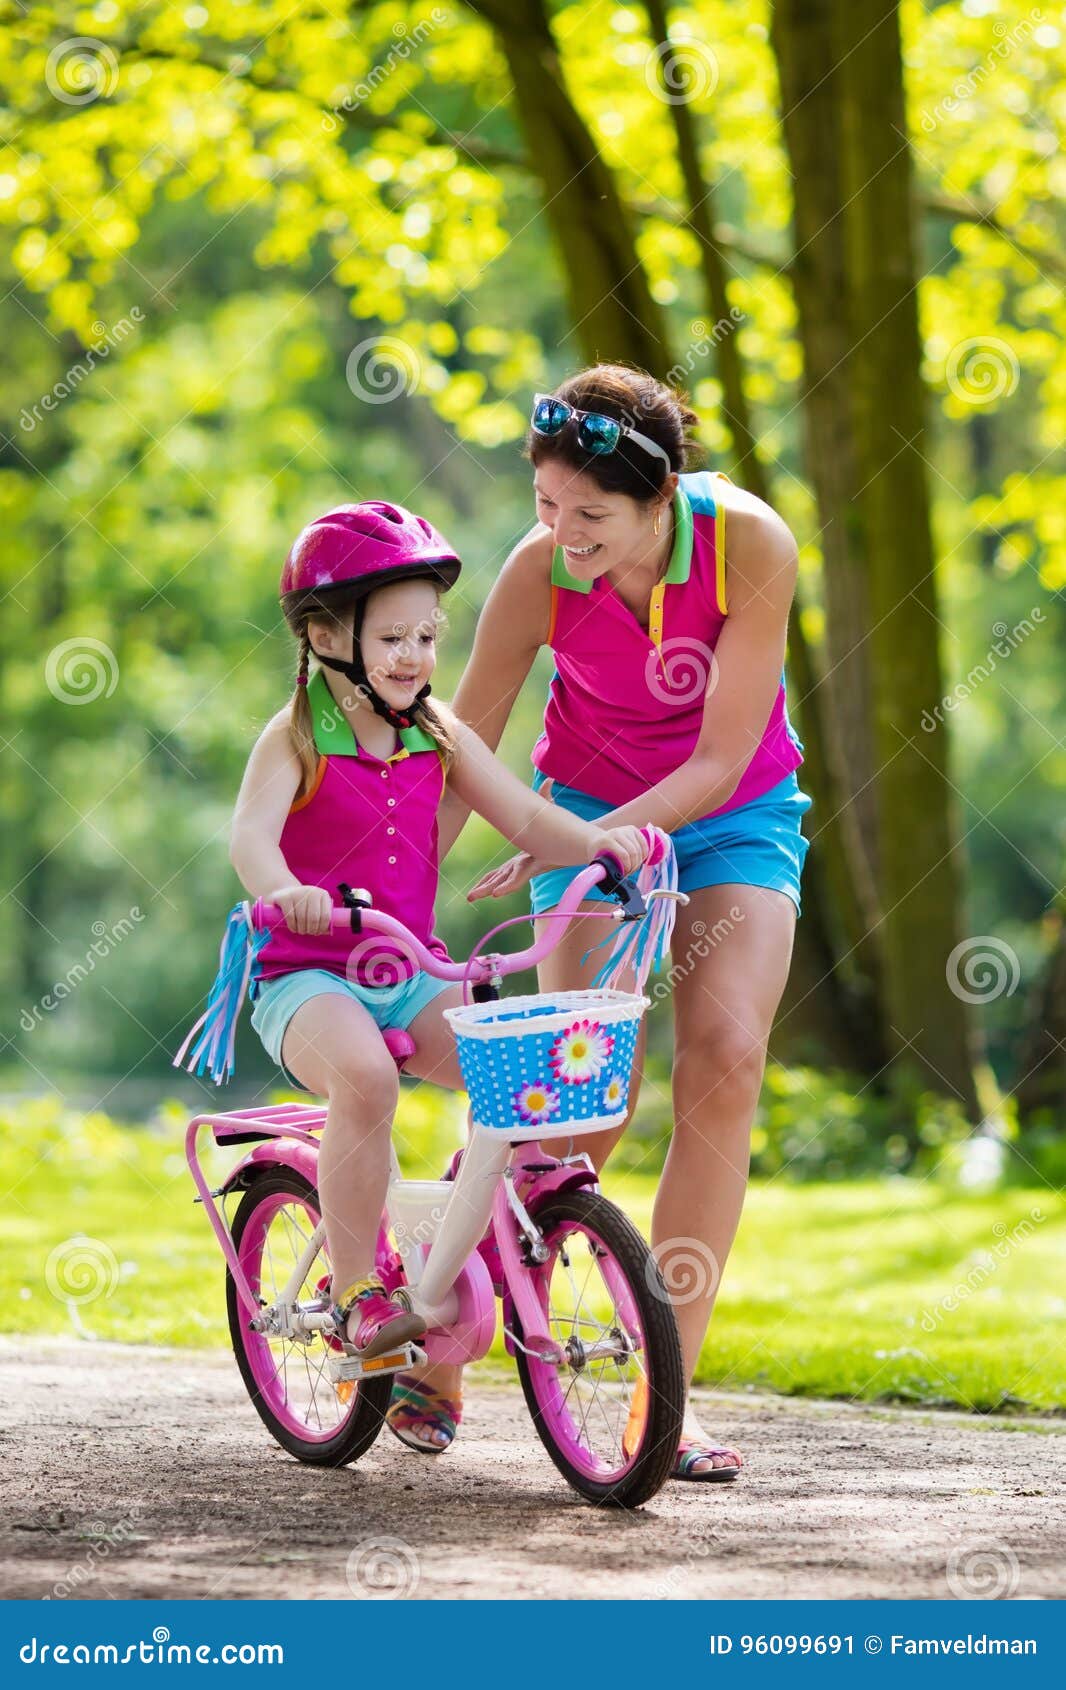 how to teach kid bike riding